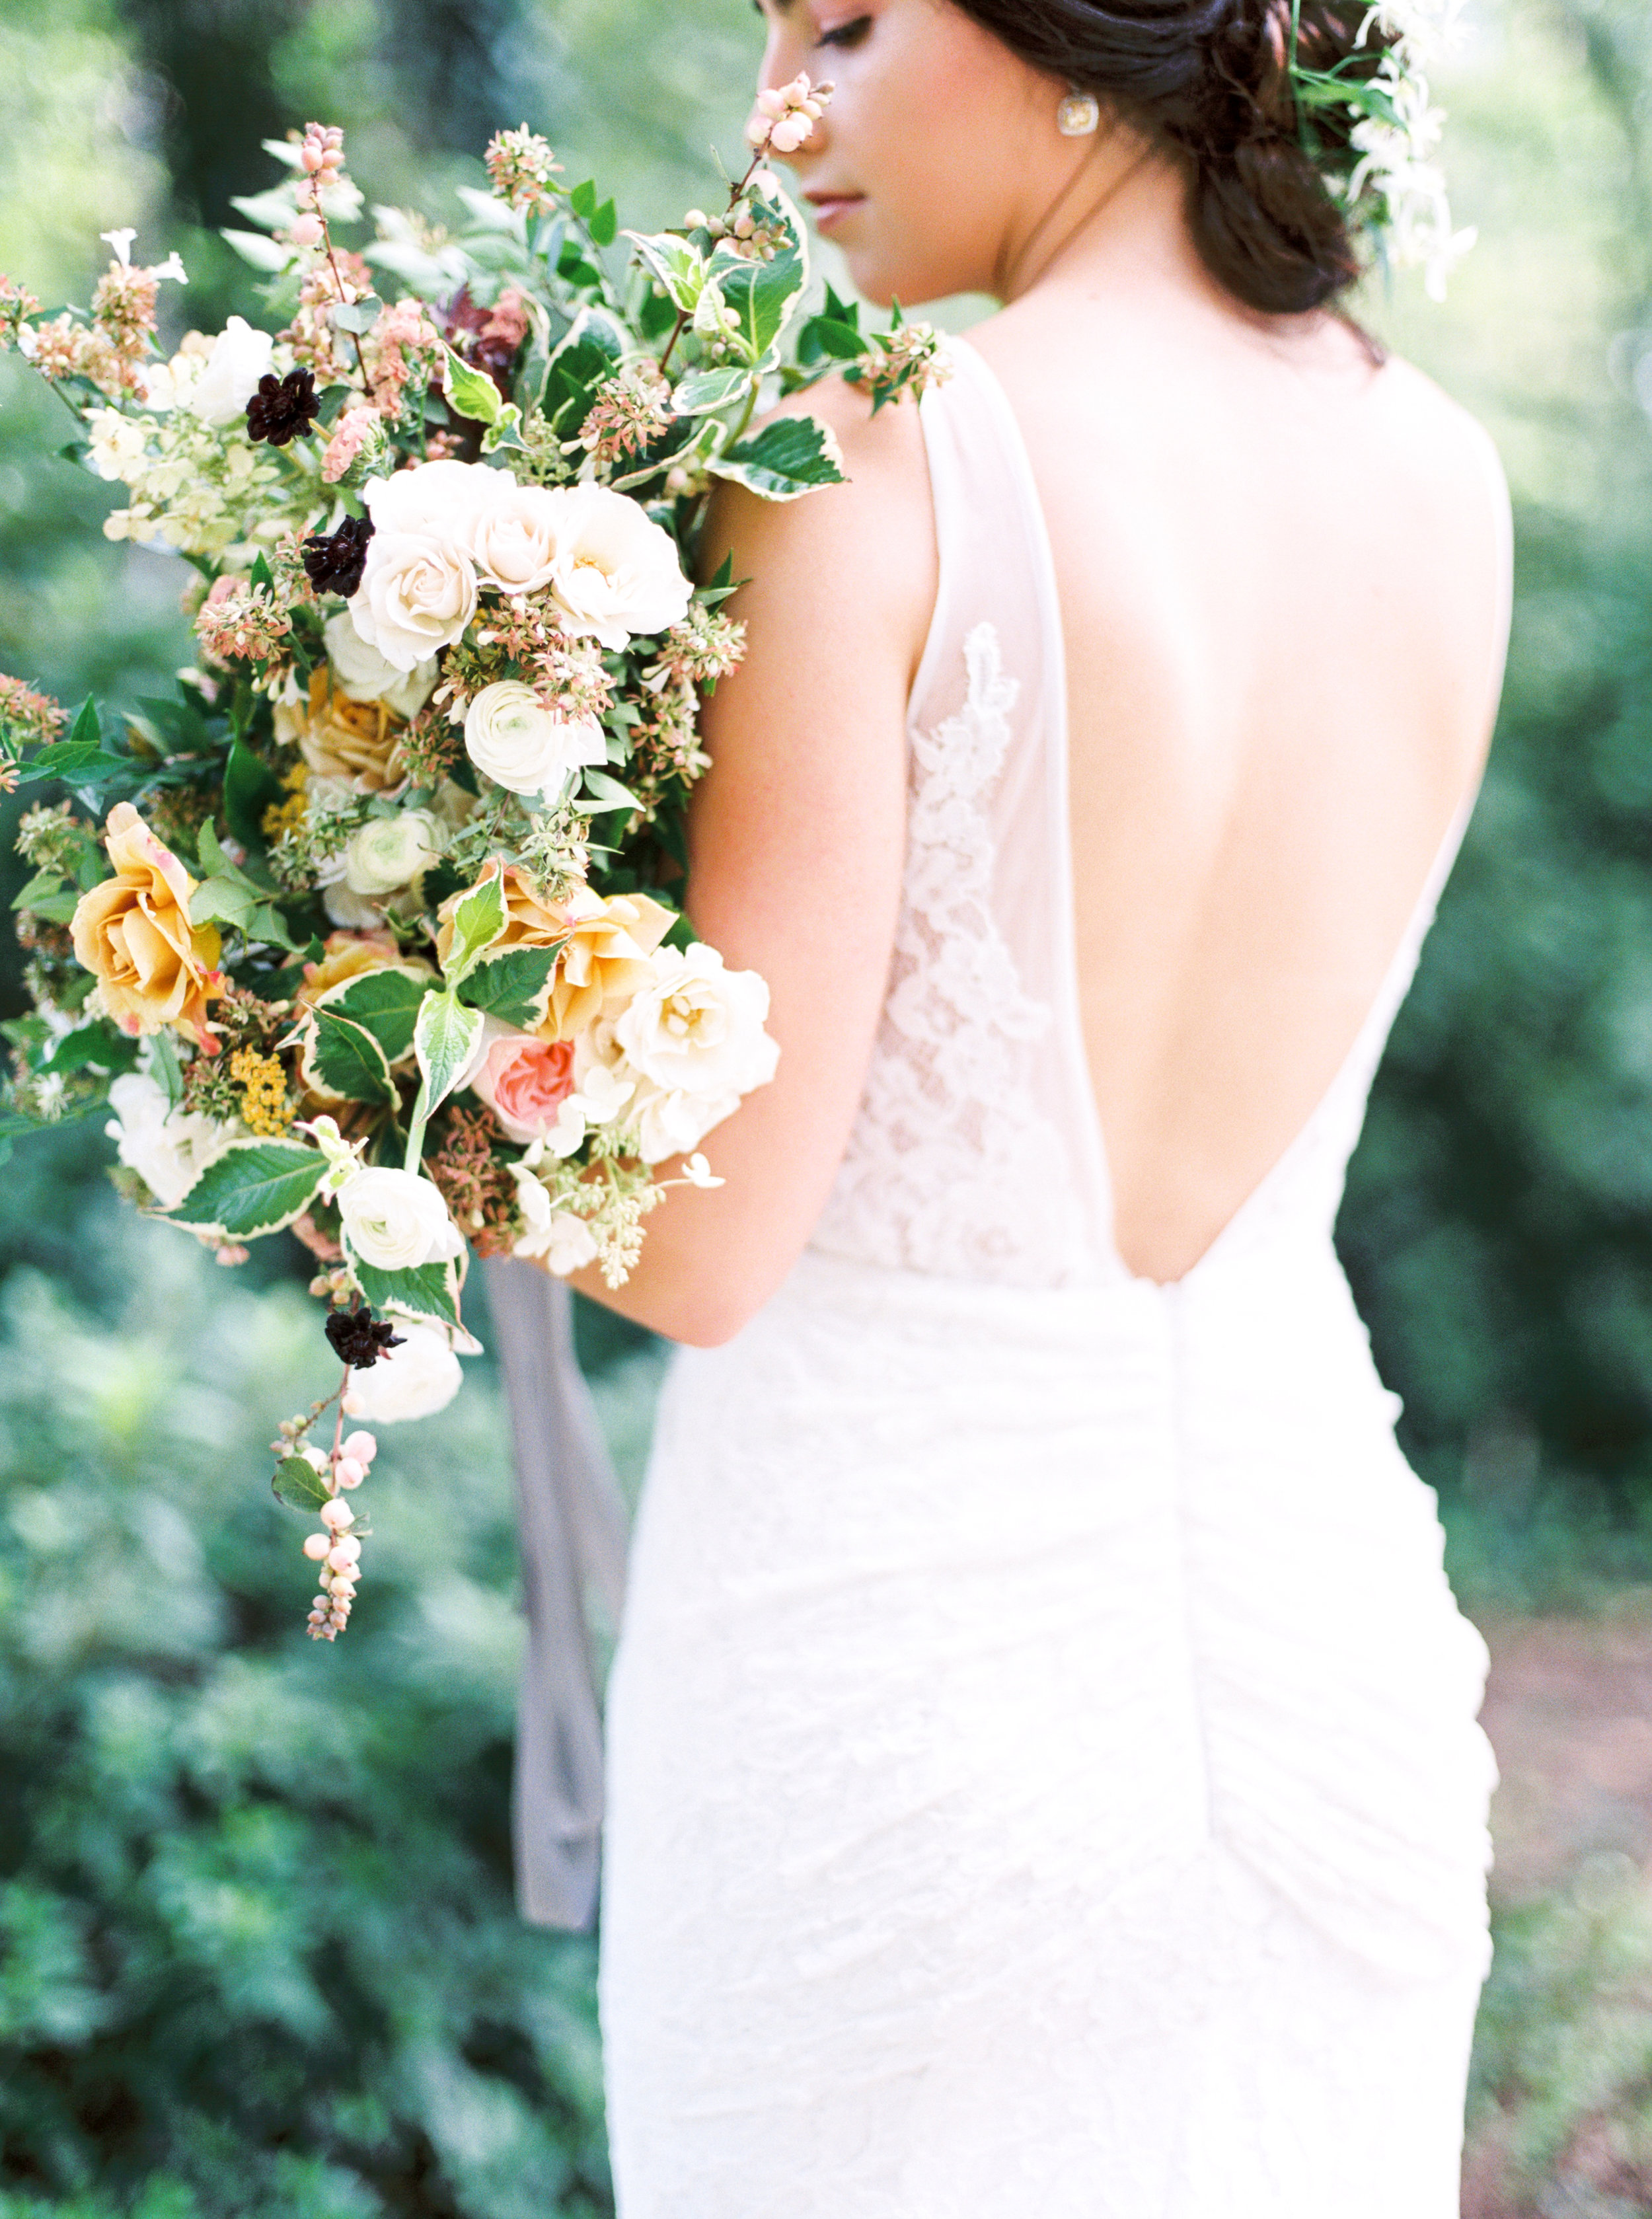 Callie Manion Photography_Garden Wedding Inspiration_051.jpg